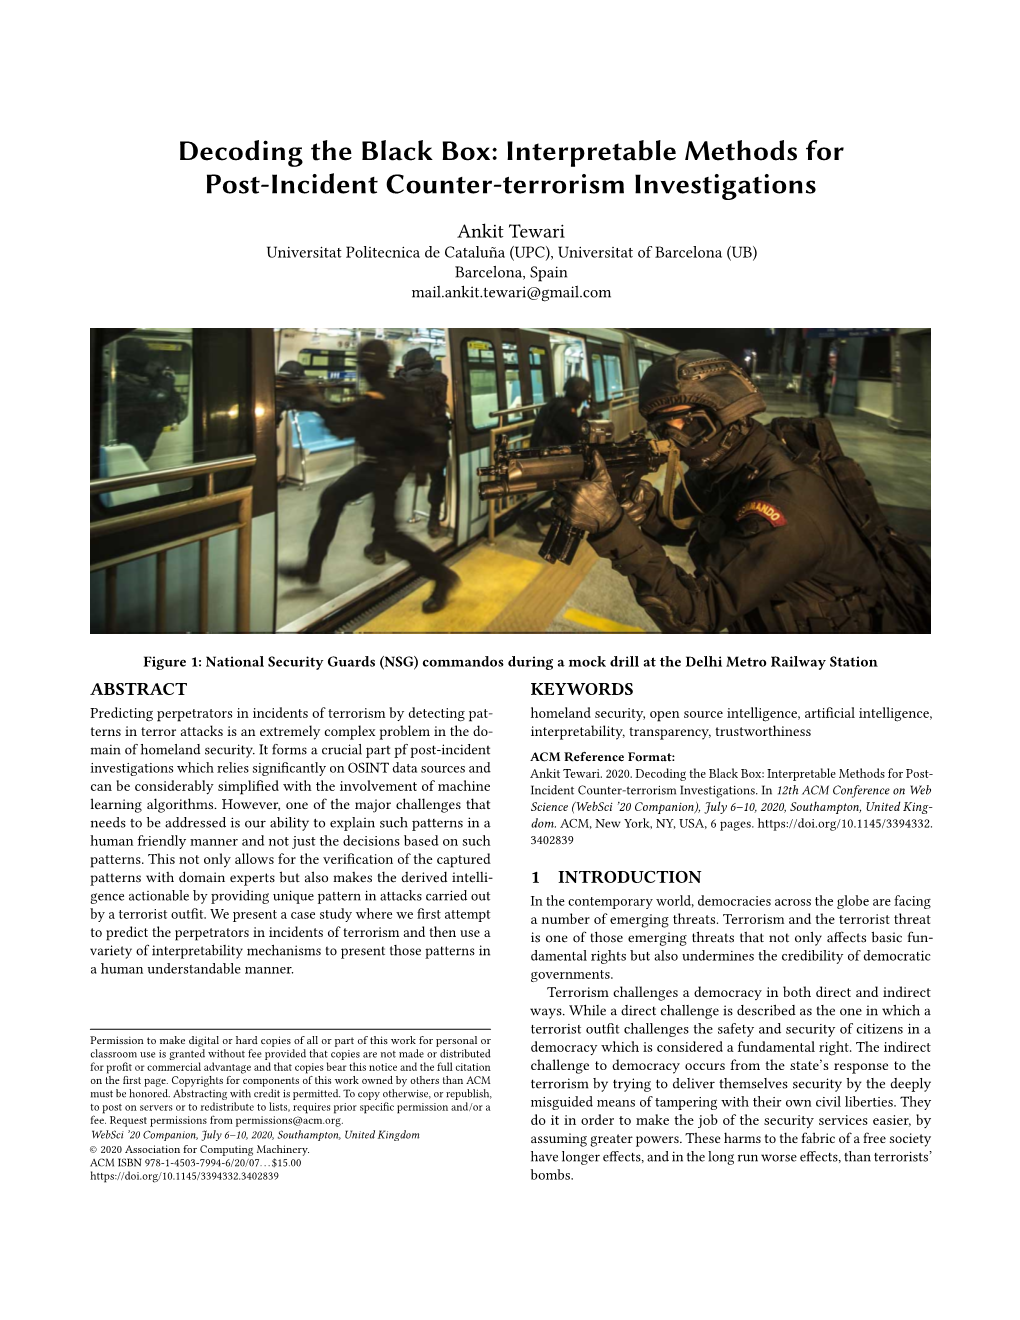 Decoding the Black Box: Interpretable Methods for Post-Incident Counter-Terrorism Investigations